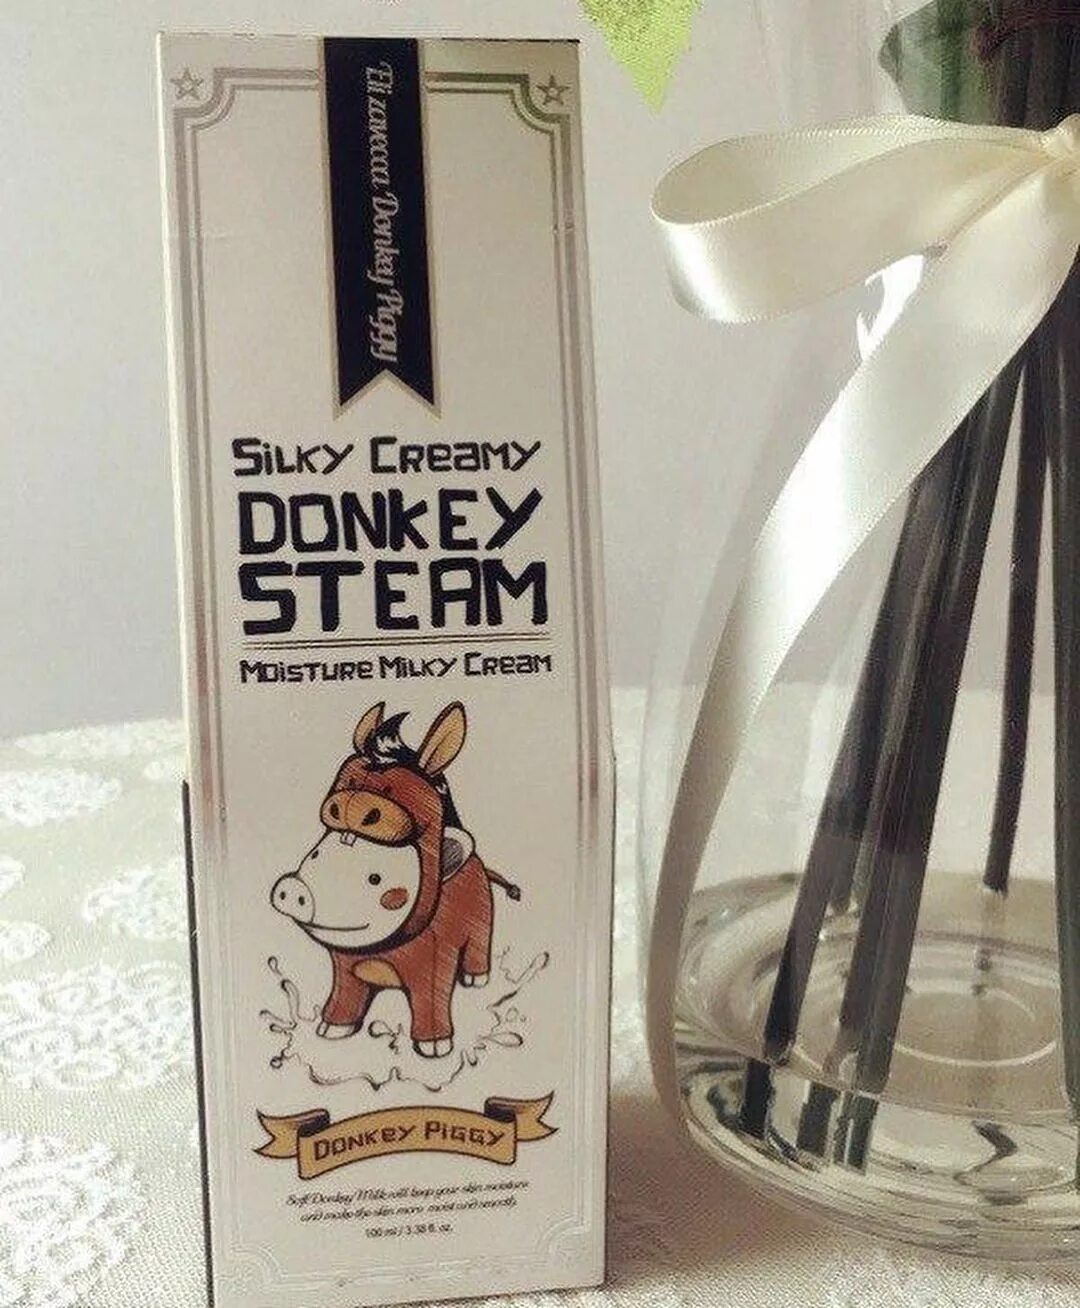 Silky creamy donkey steam cream moisture milky cream фото 60